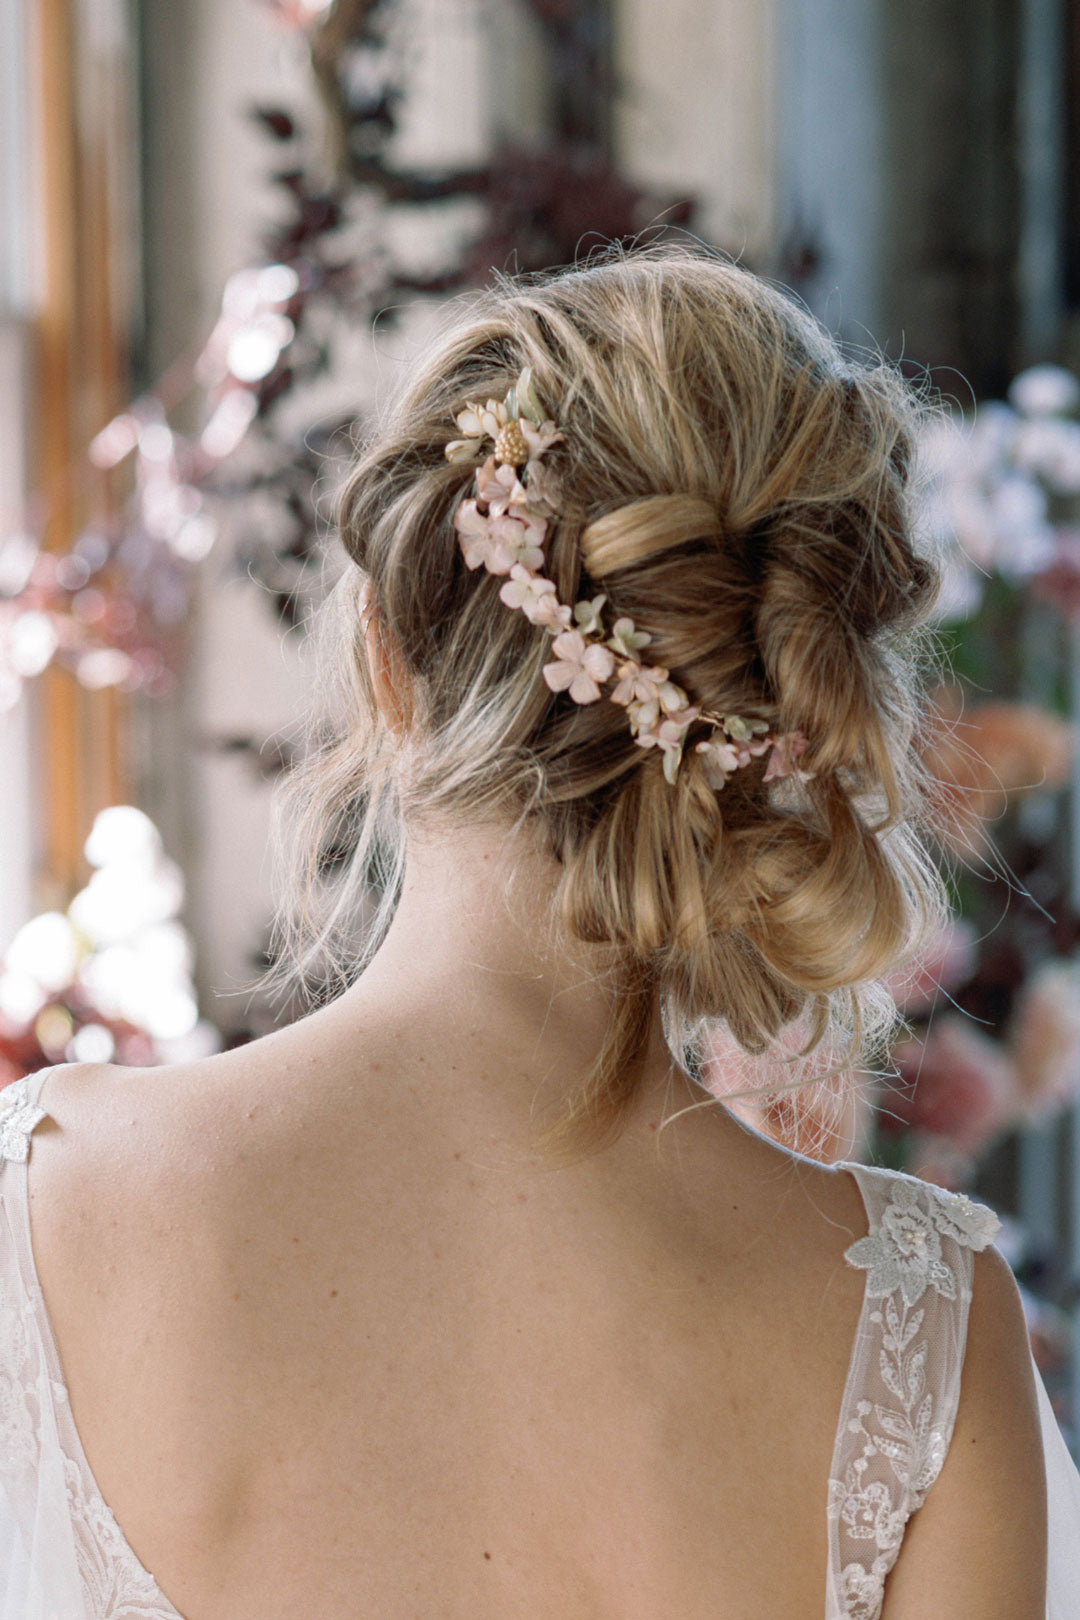 Bridal Hair Accessorie Primavera Hair Vine in Model's Hair